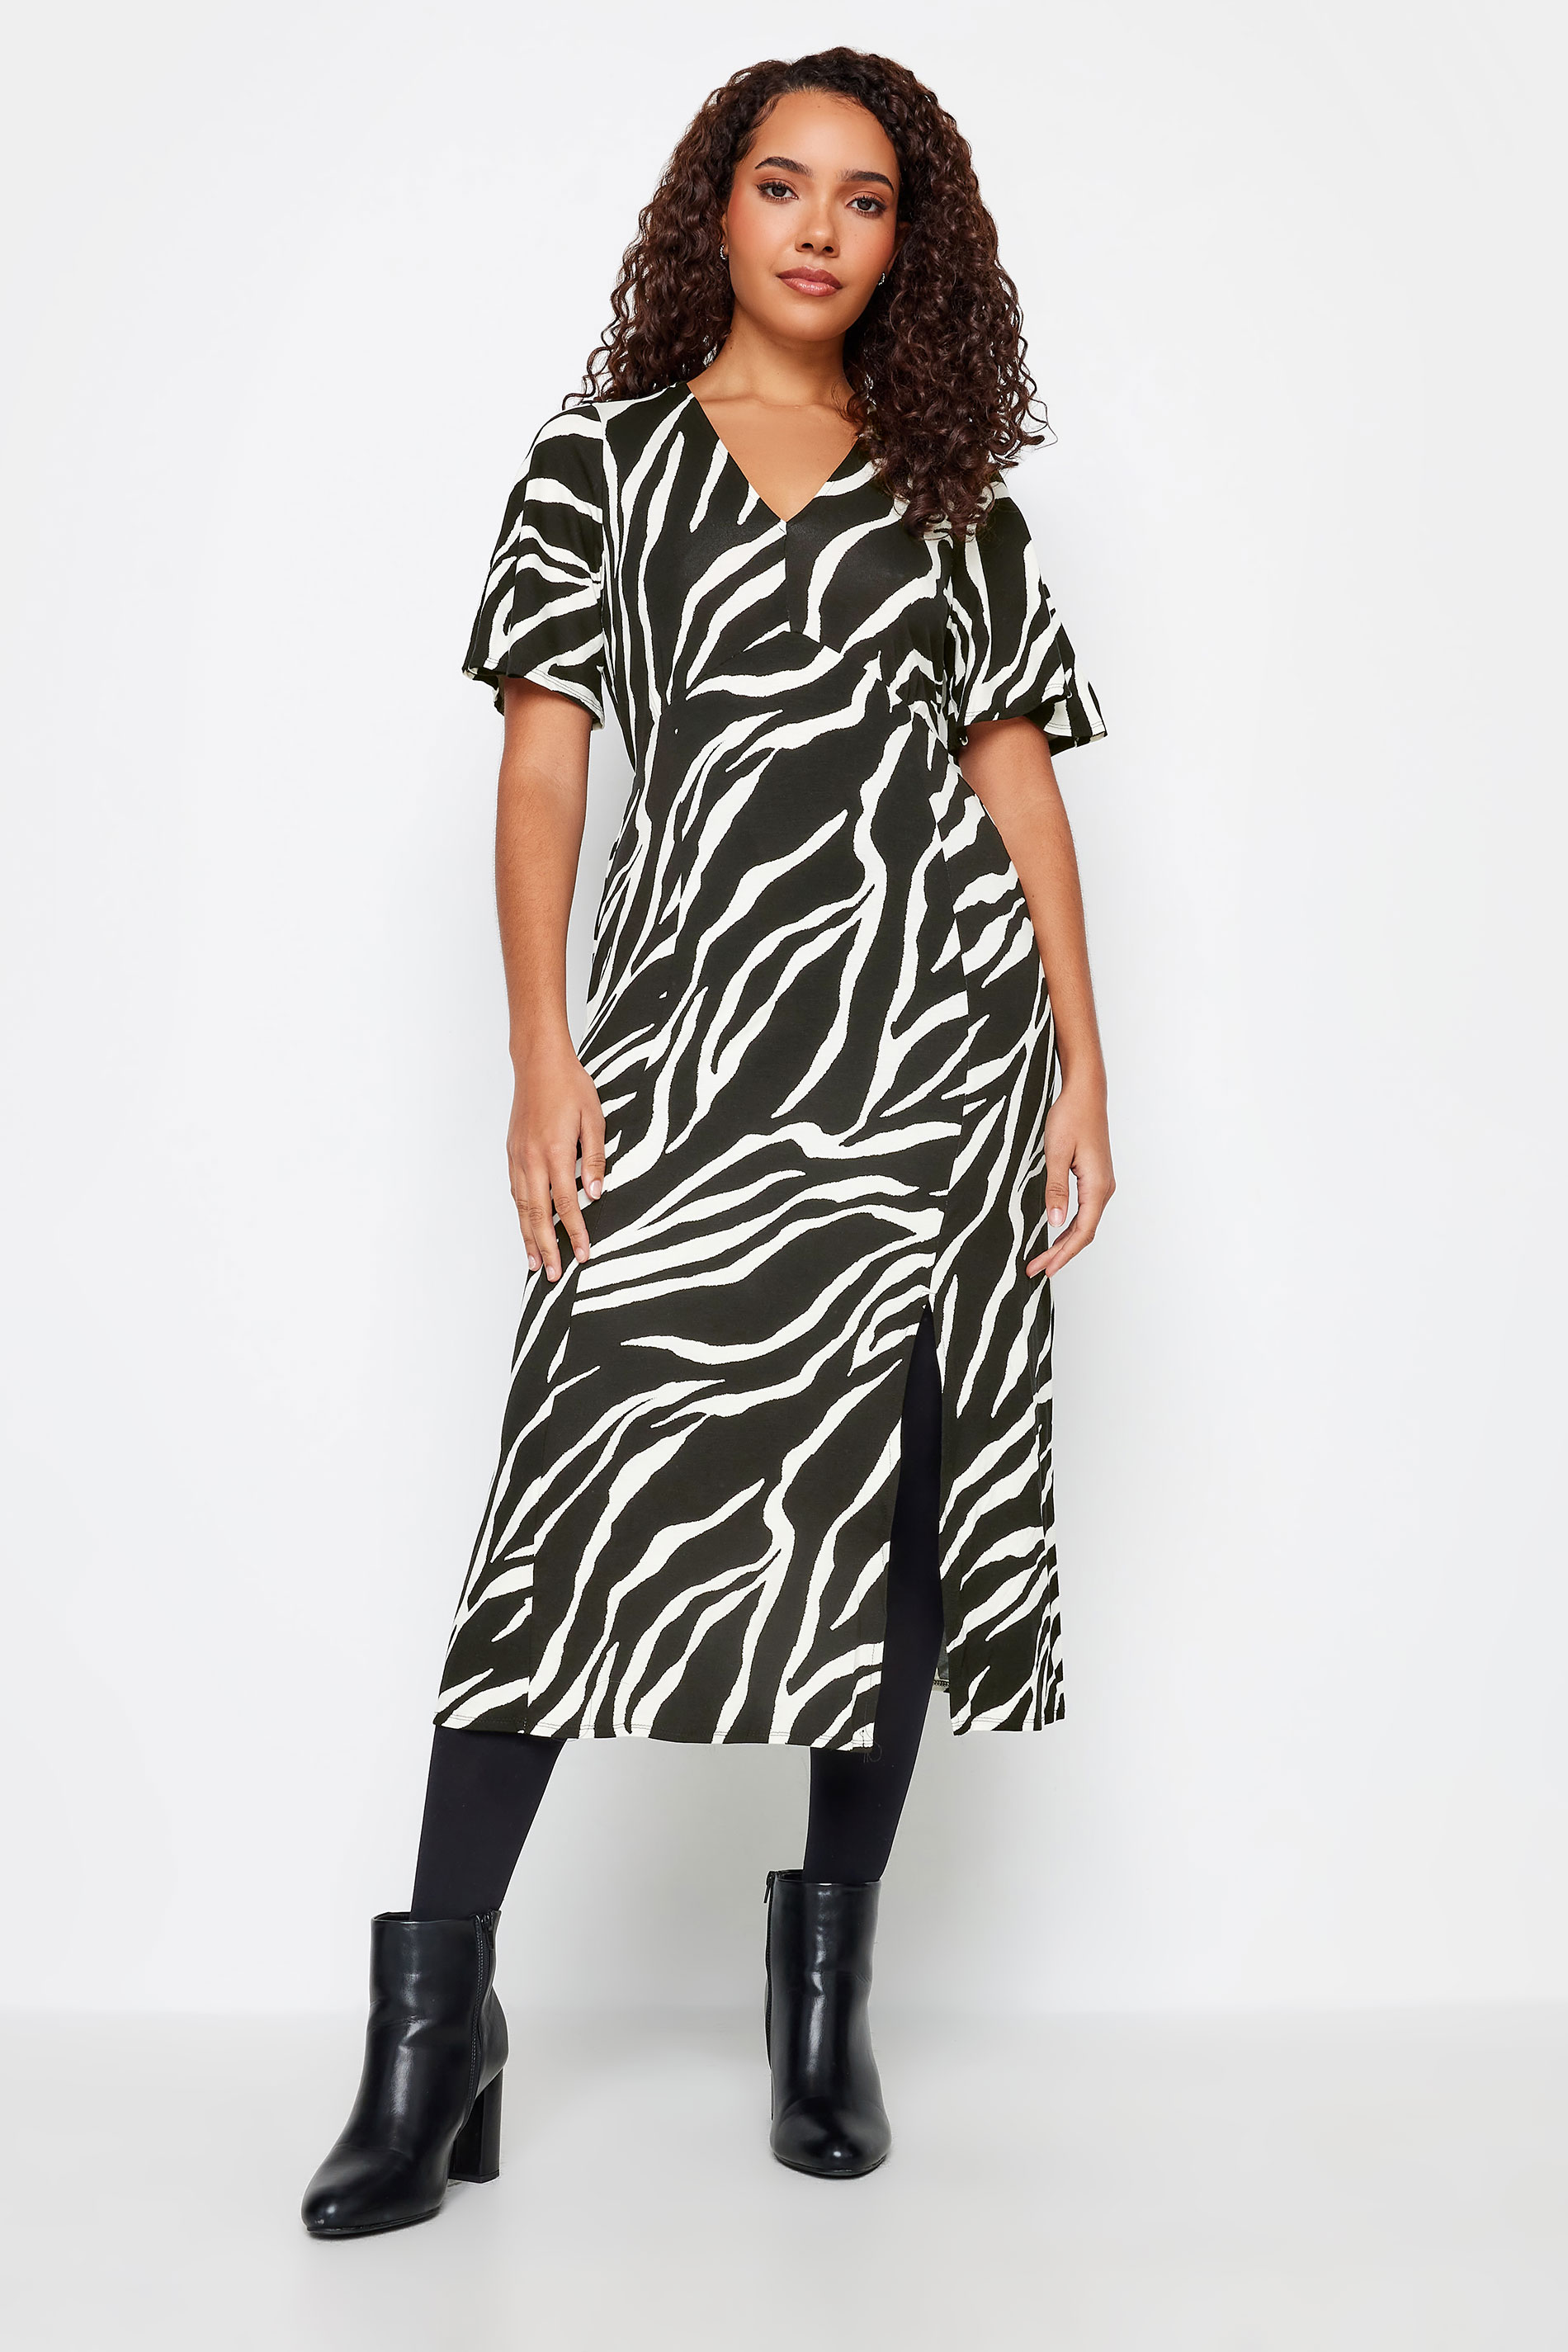 M&Co Black & White Swirl Print Midi Dress  | M&Co 1